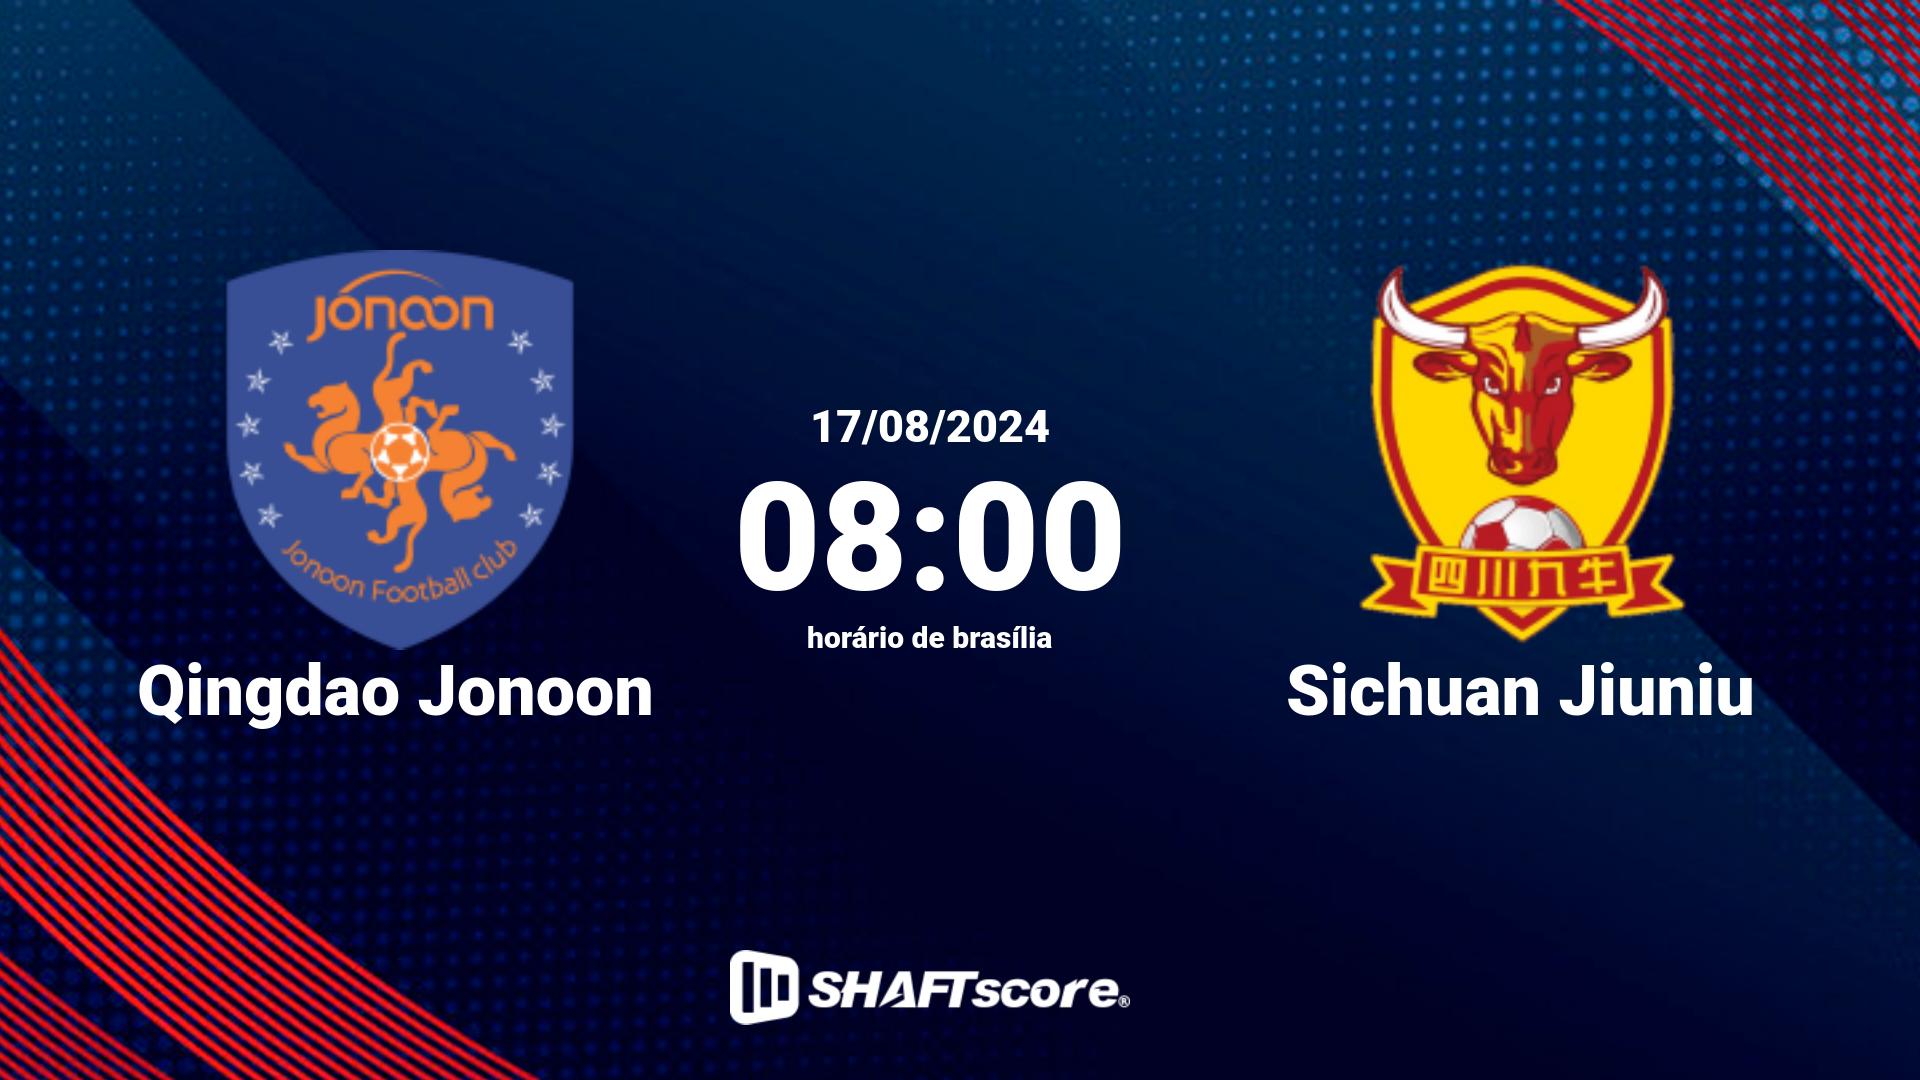 Estatísticas do jogo Qingdao Jonoon vs Sichuan Jiuniu 17.08 08:00